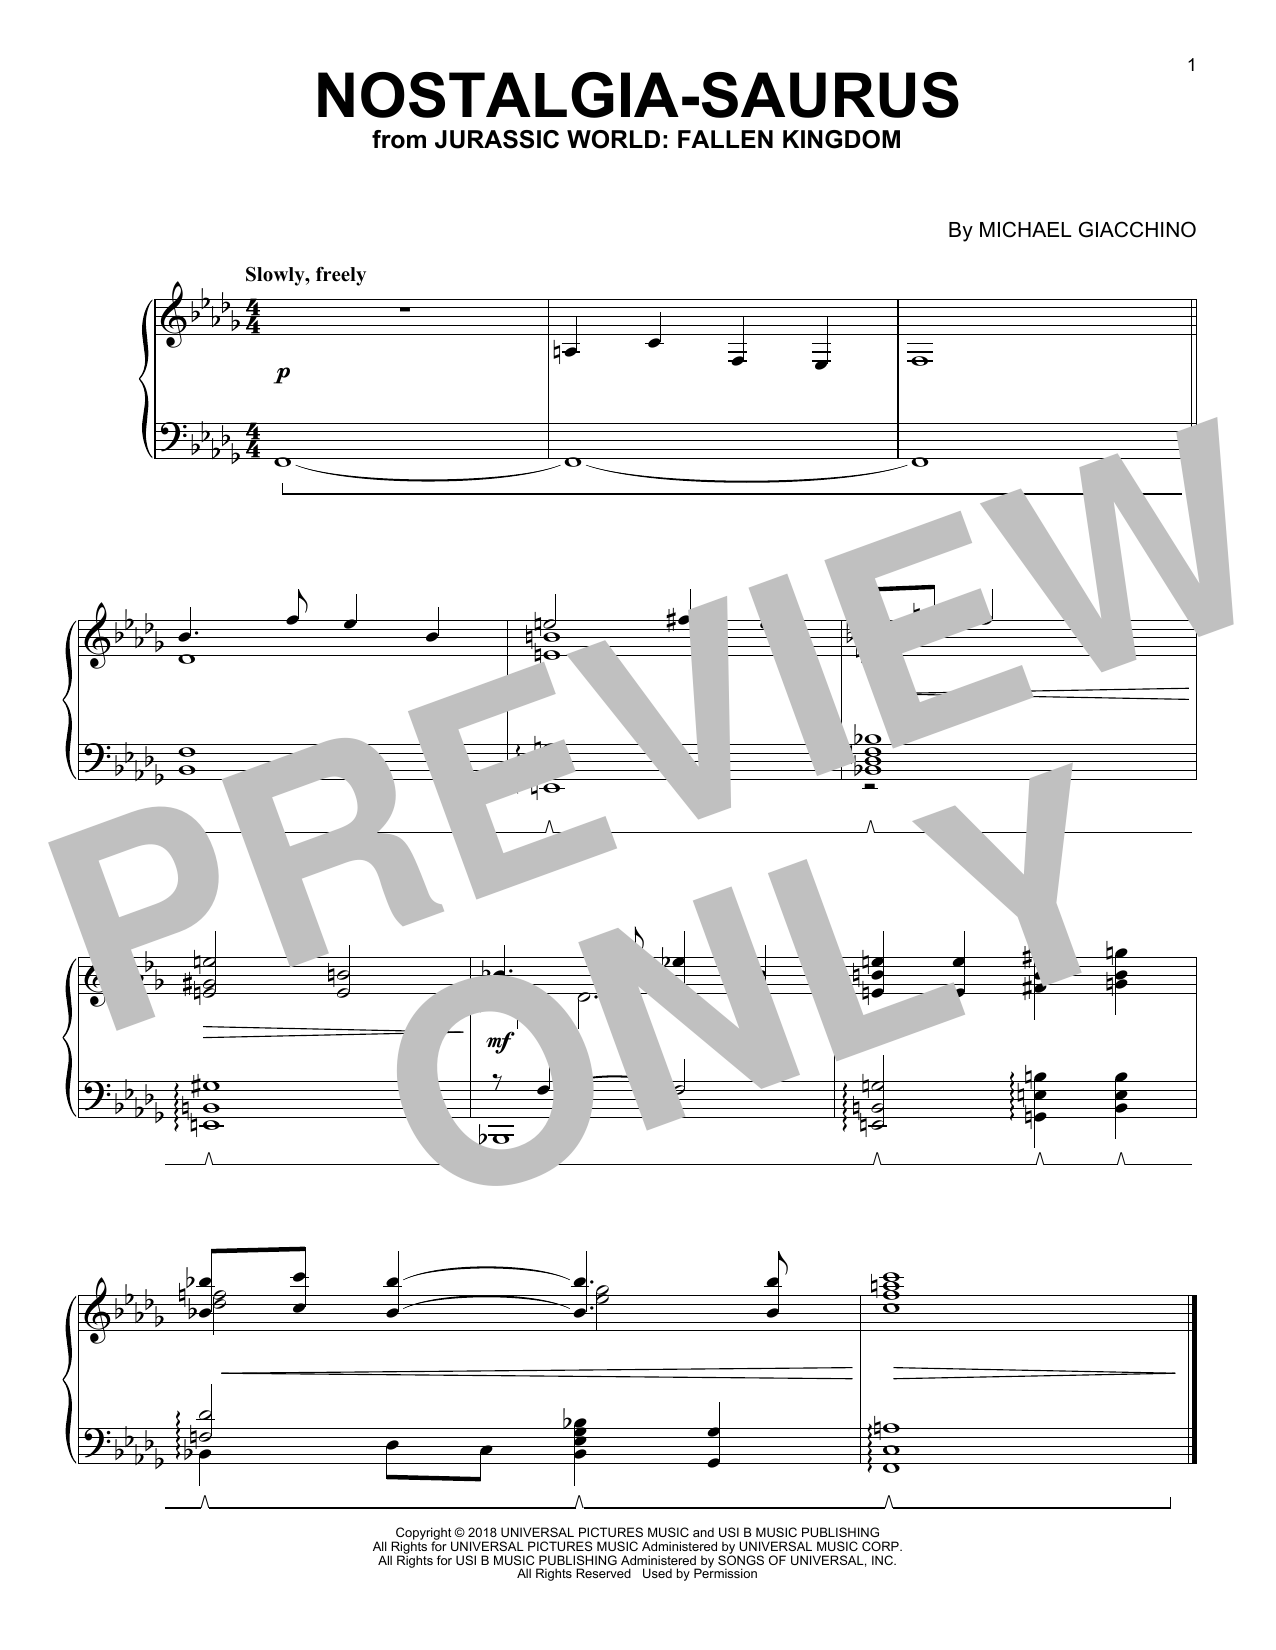 Michael Giacchino Nostalgia-Saurus (from Jurassic World: Fallen Kingdom) Sheet Music Notes & Chords for Piano - Download or Print PDF